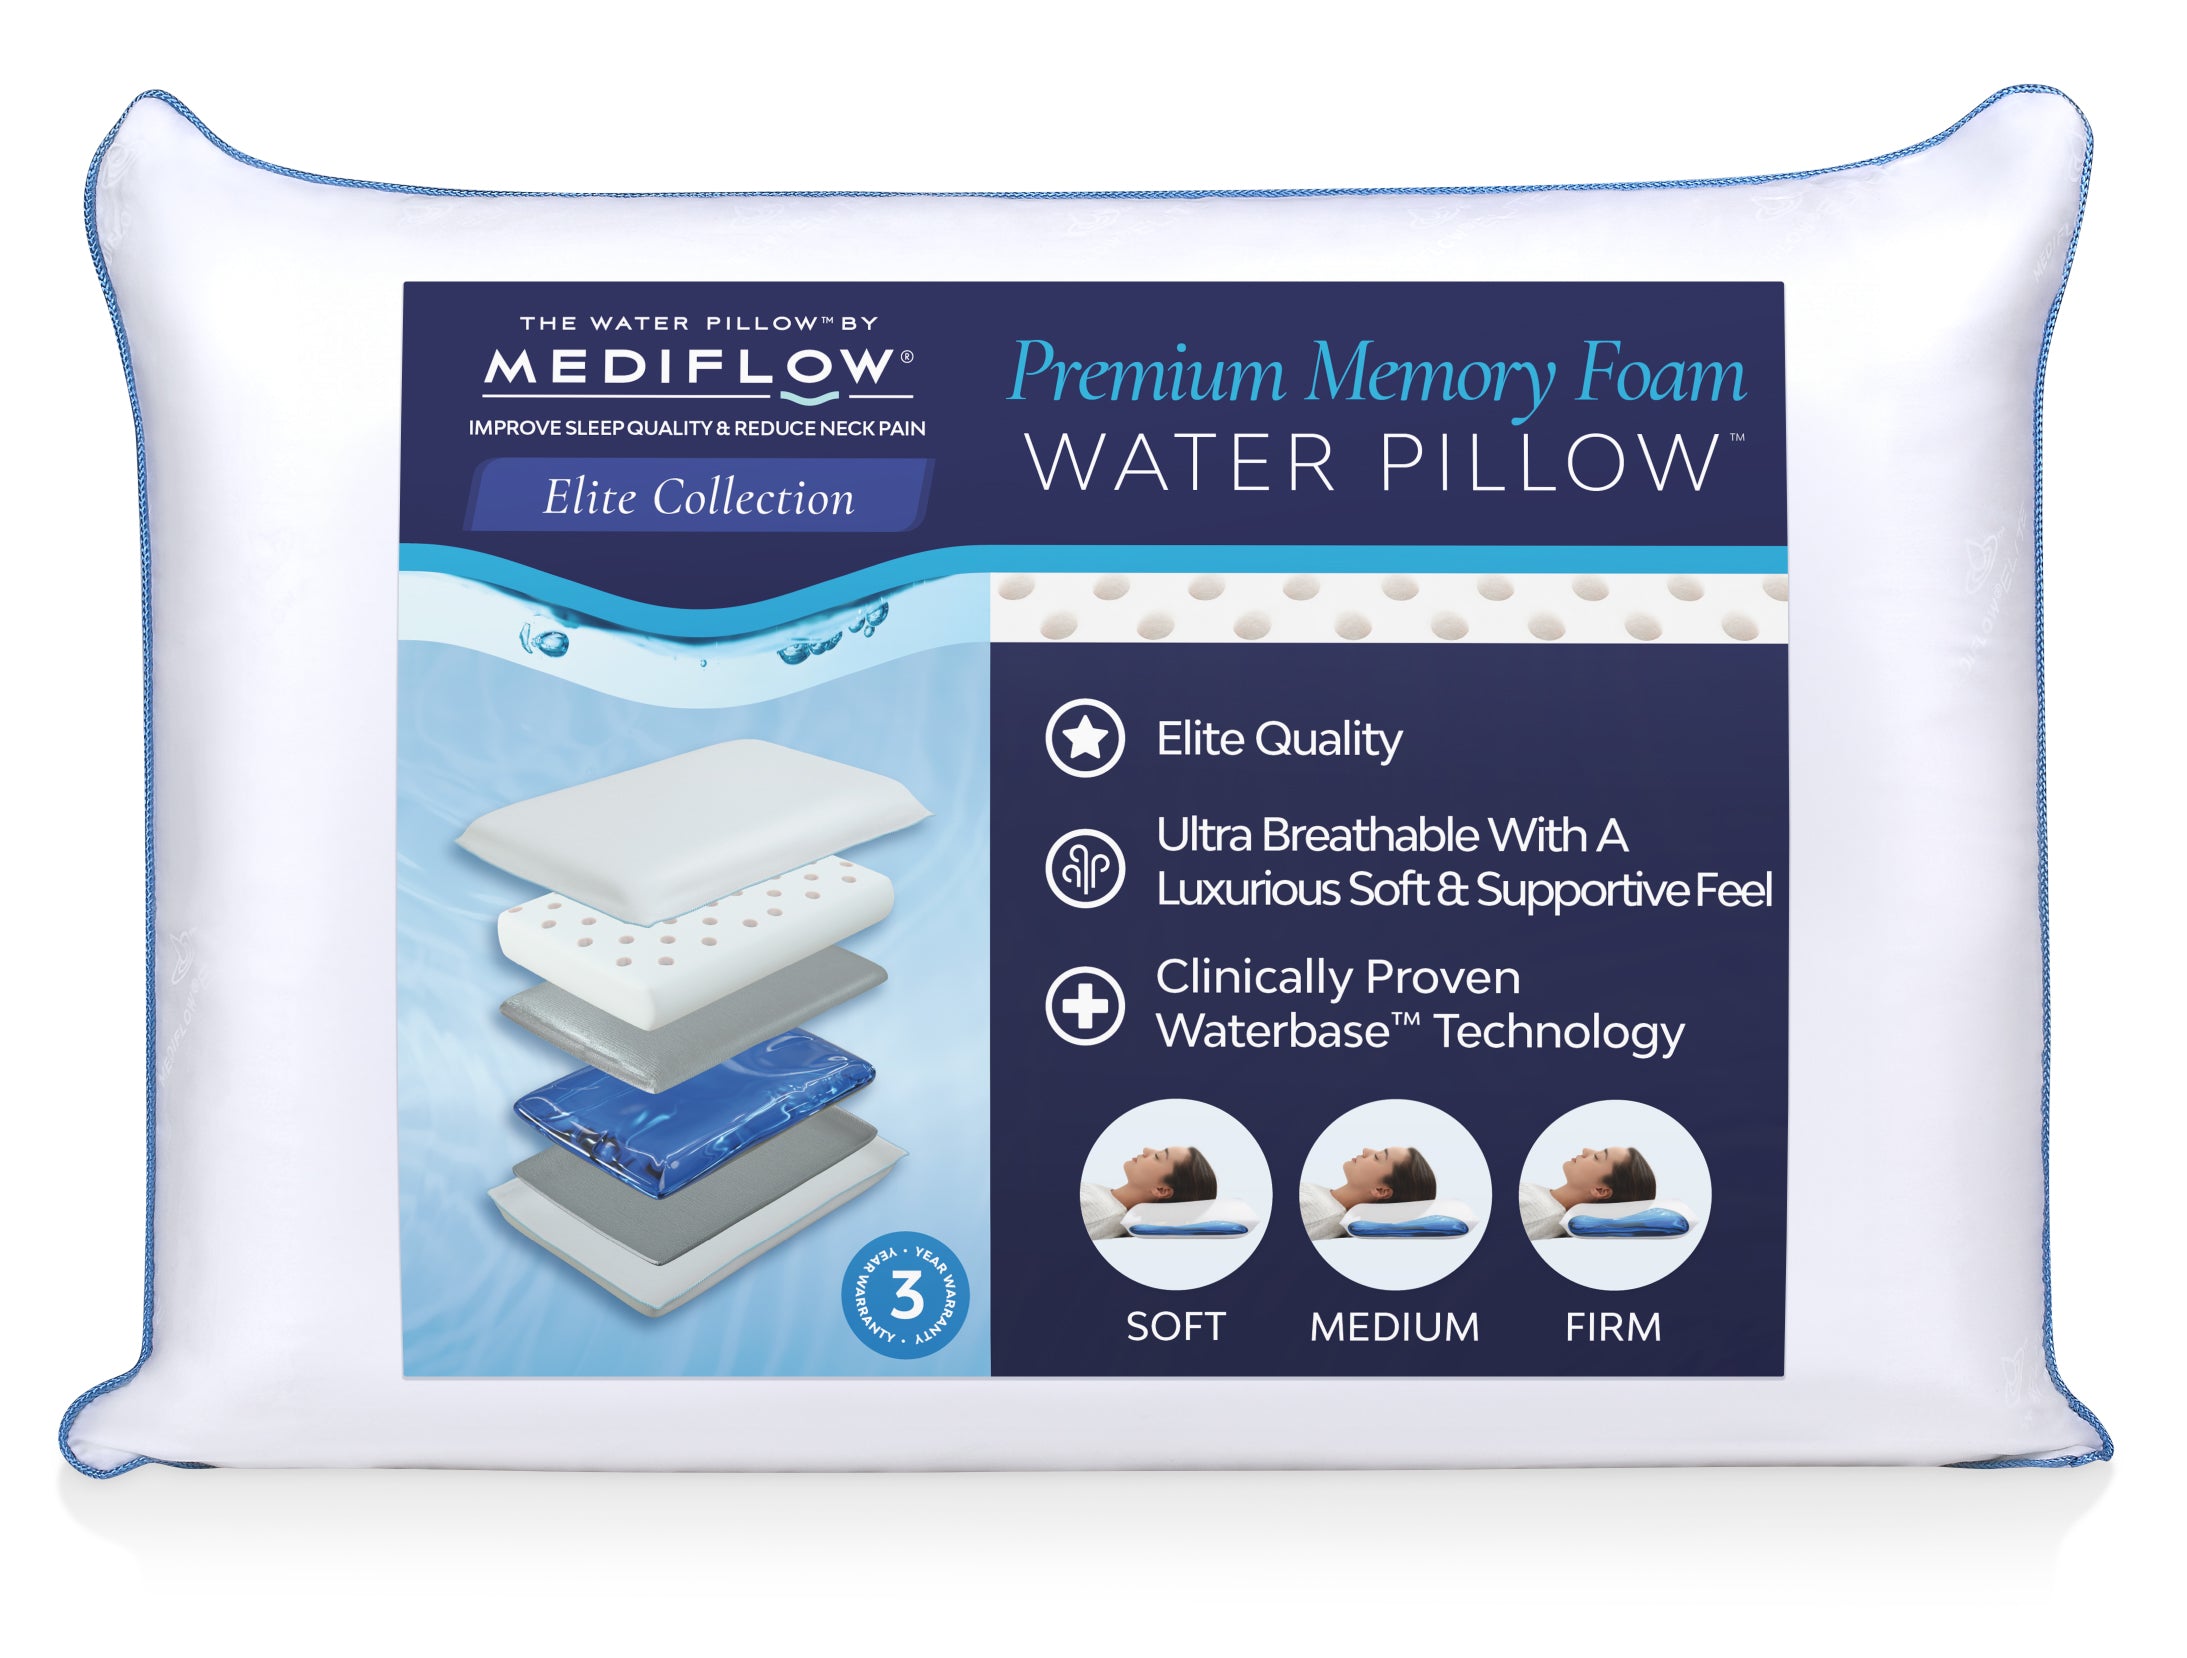 Chiroflow water pillow